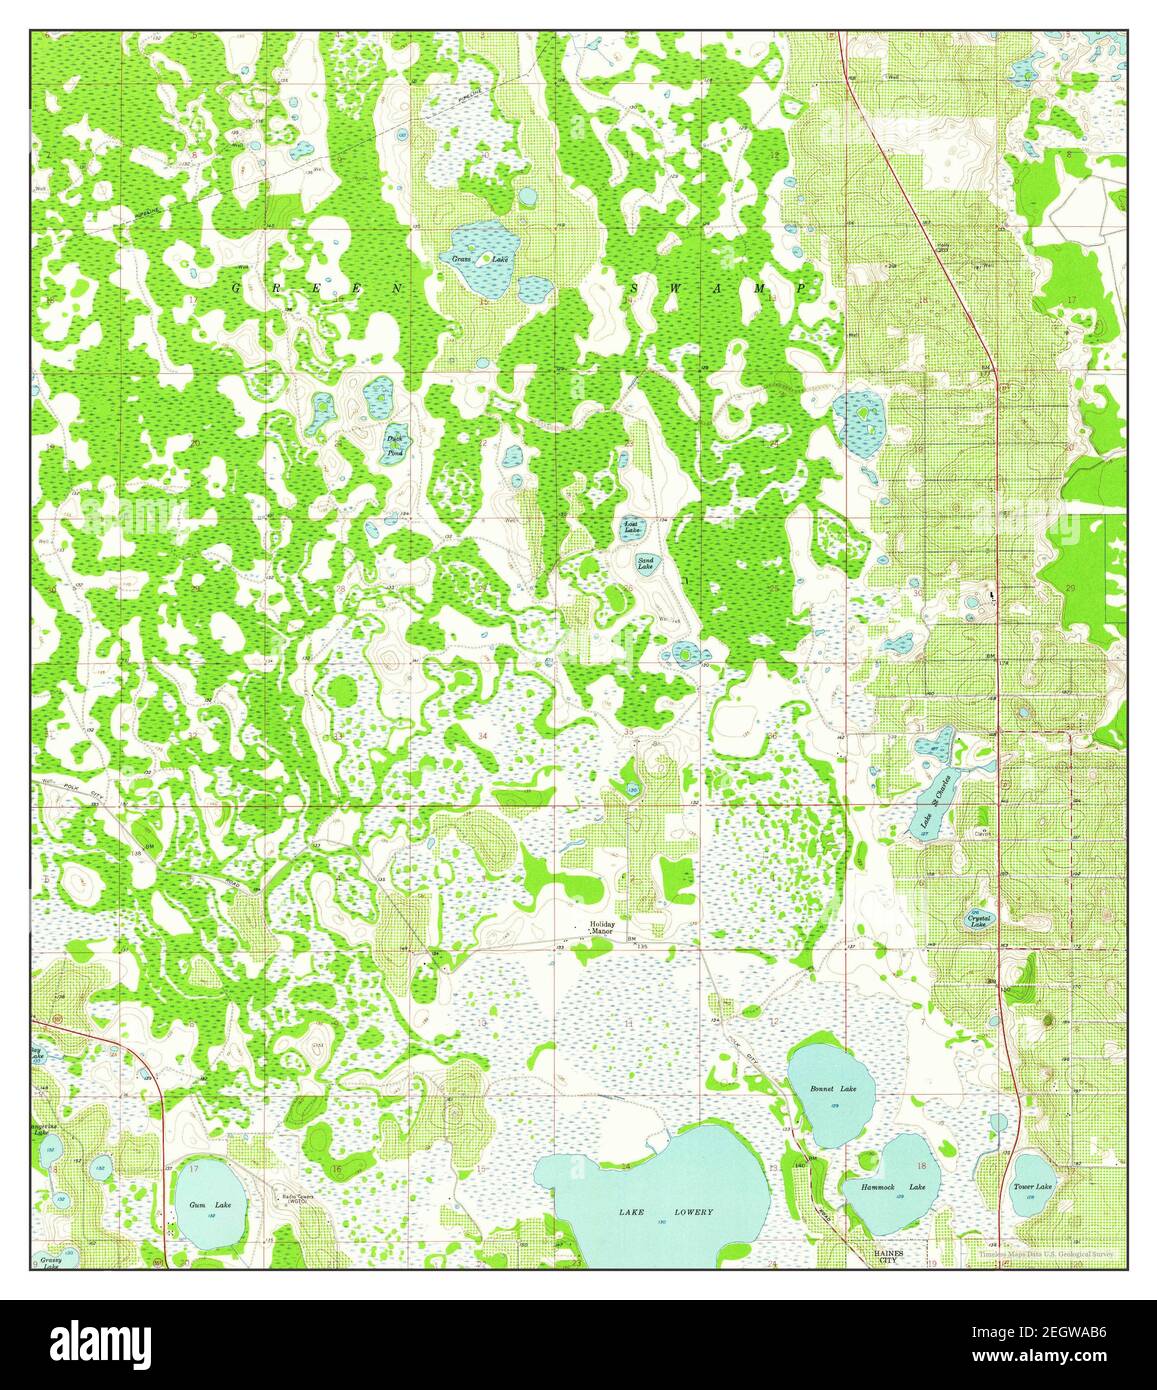 Gum Lake, Florida, map 1959, 1:24000, United States of America by Timeless Maps, data U.S. Geological Survey Stock Photo